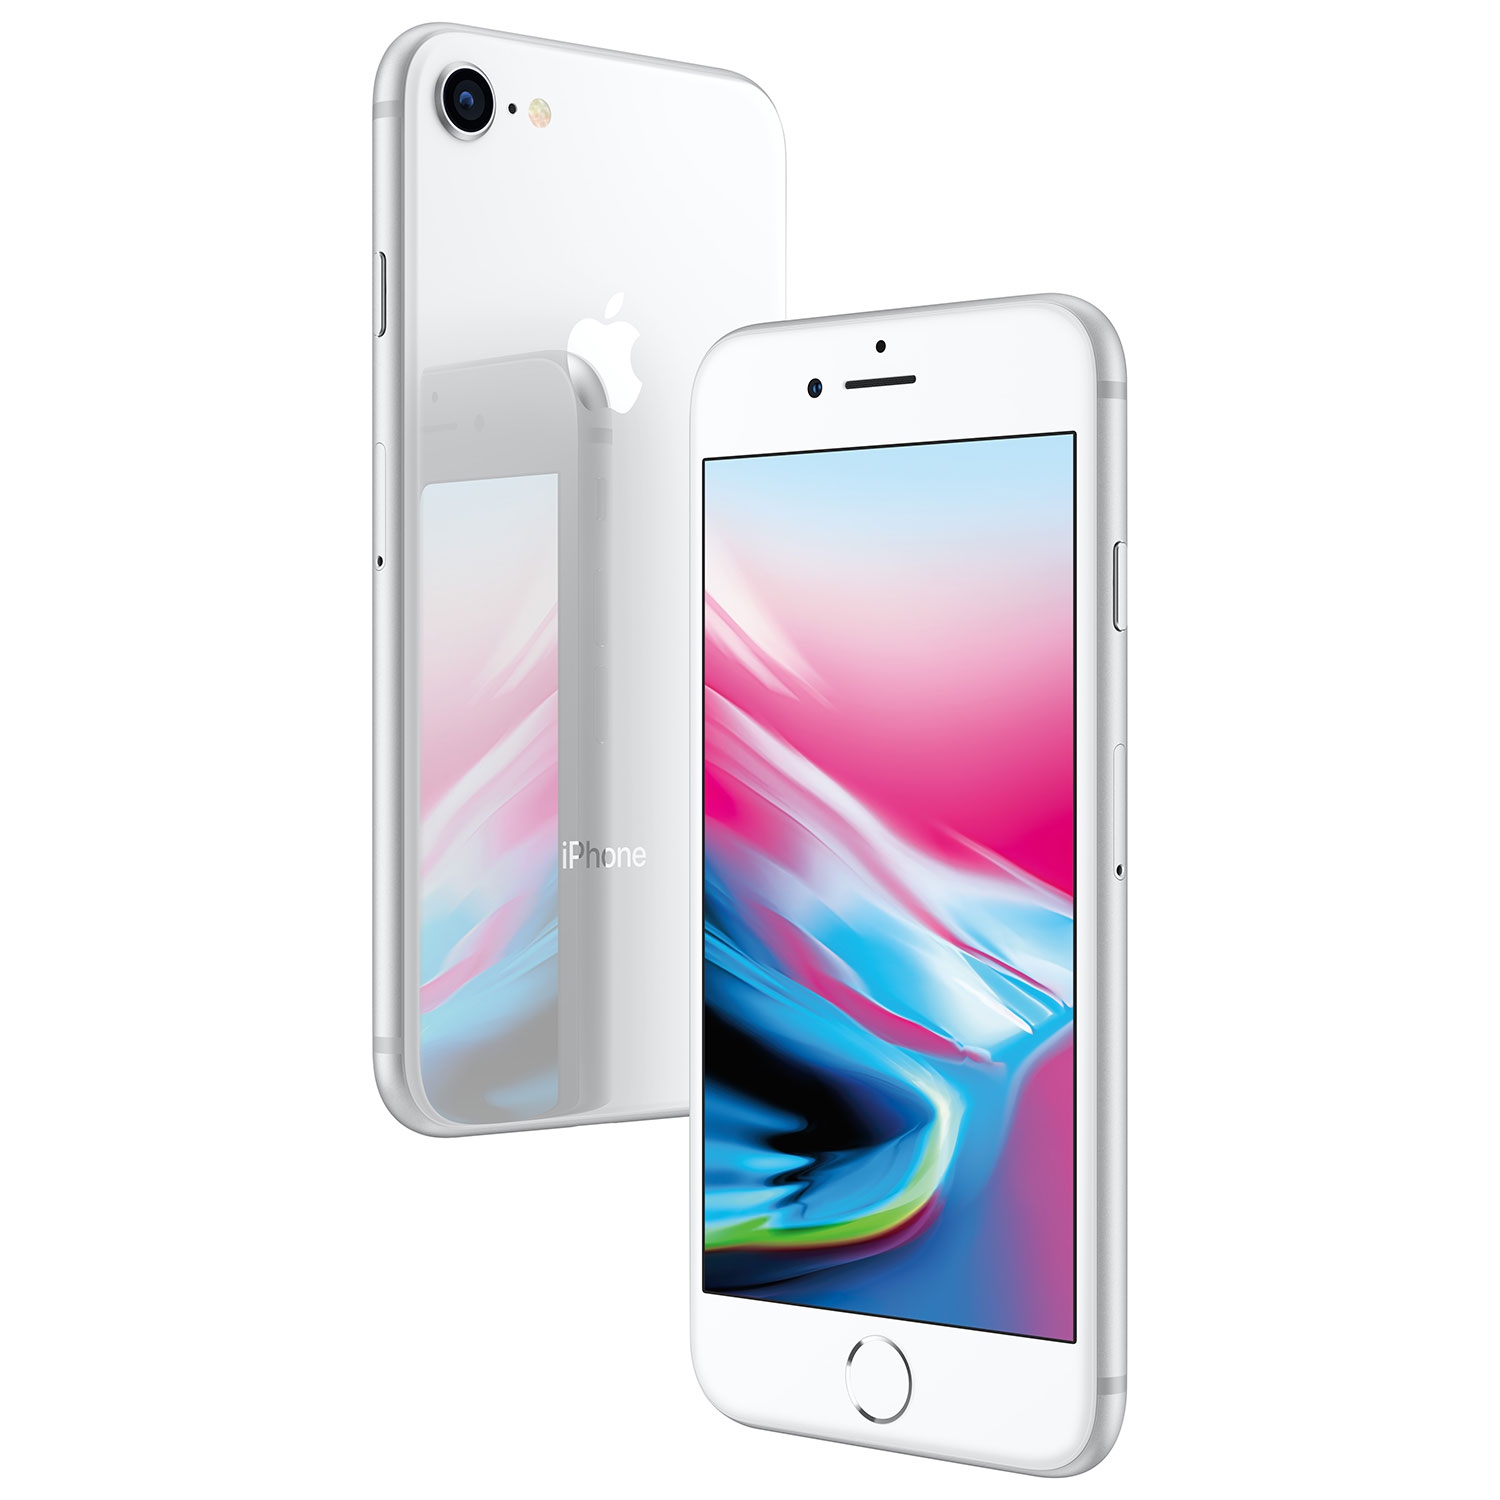 Refurbished (Good) - Apple iPhone 8 256GB Smartphone - Silver 